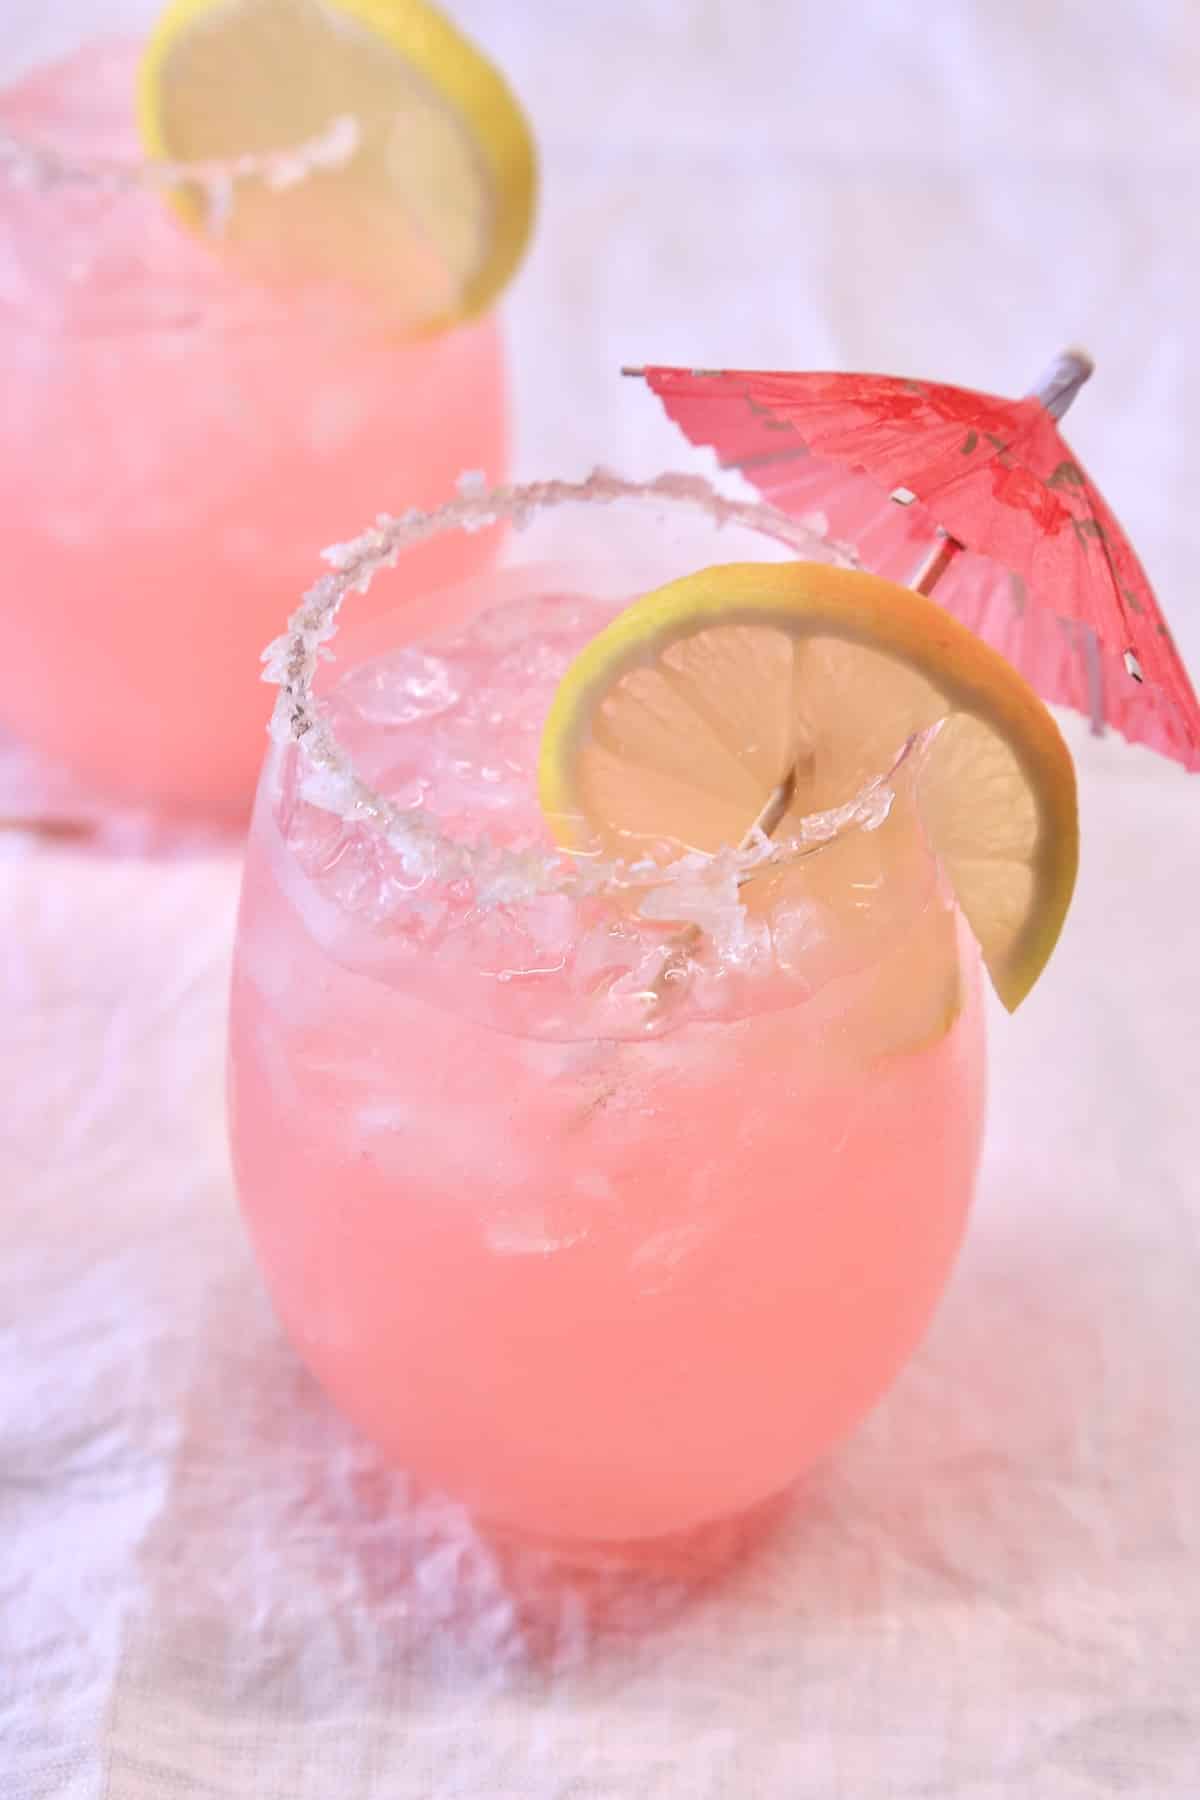 2 stemless wine glasses with pink margaritas. Drink umbrella and lemon wheel garnish.